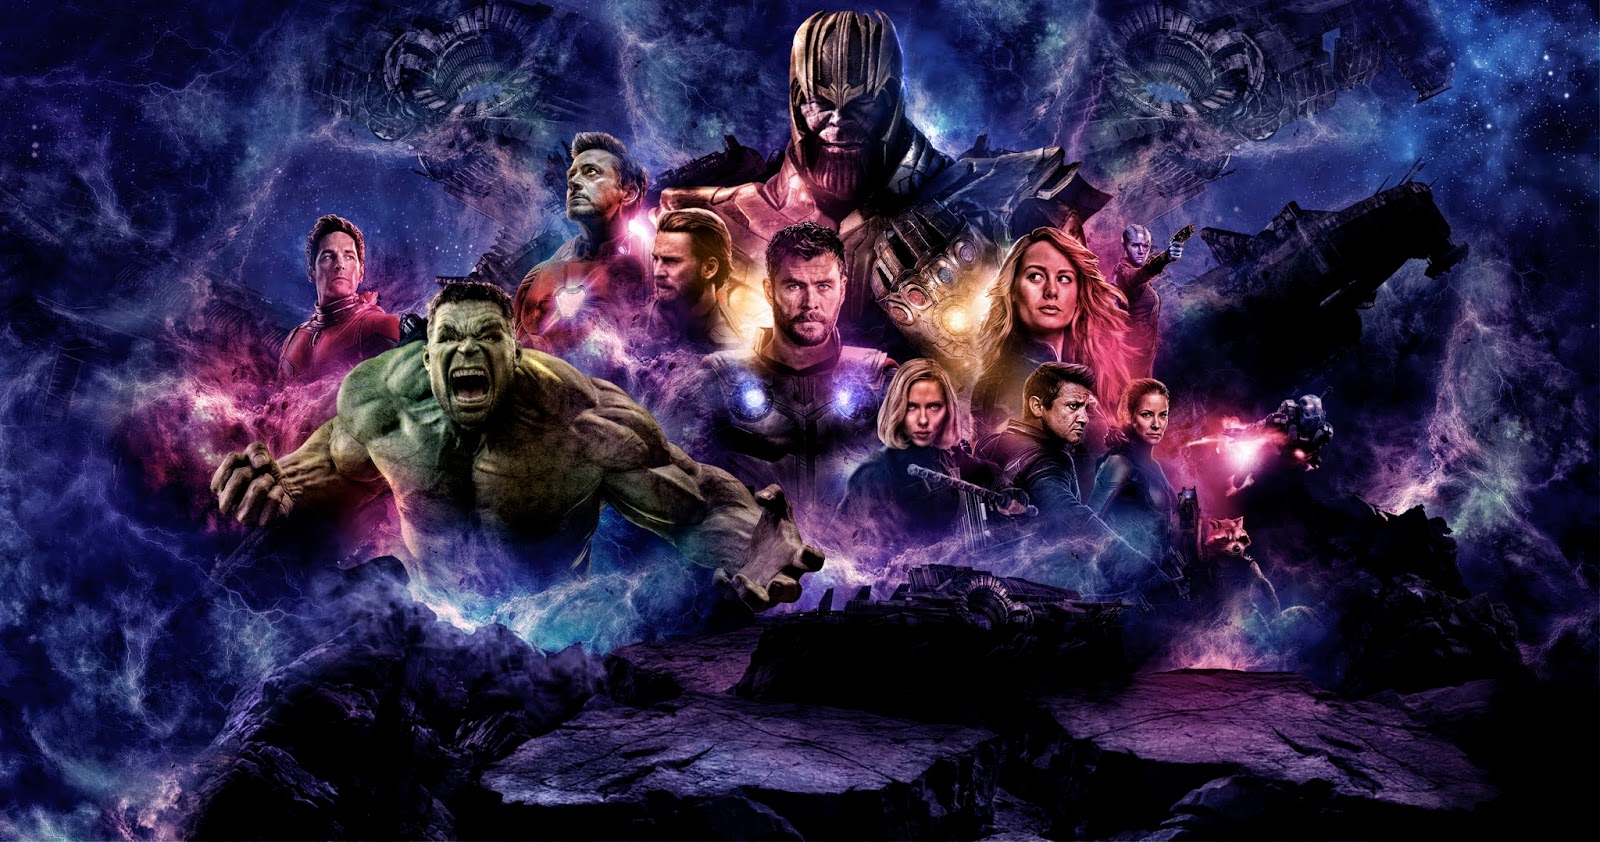 Avengers End Game HD Wallpaper In 4k Captain America Iron Man